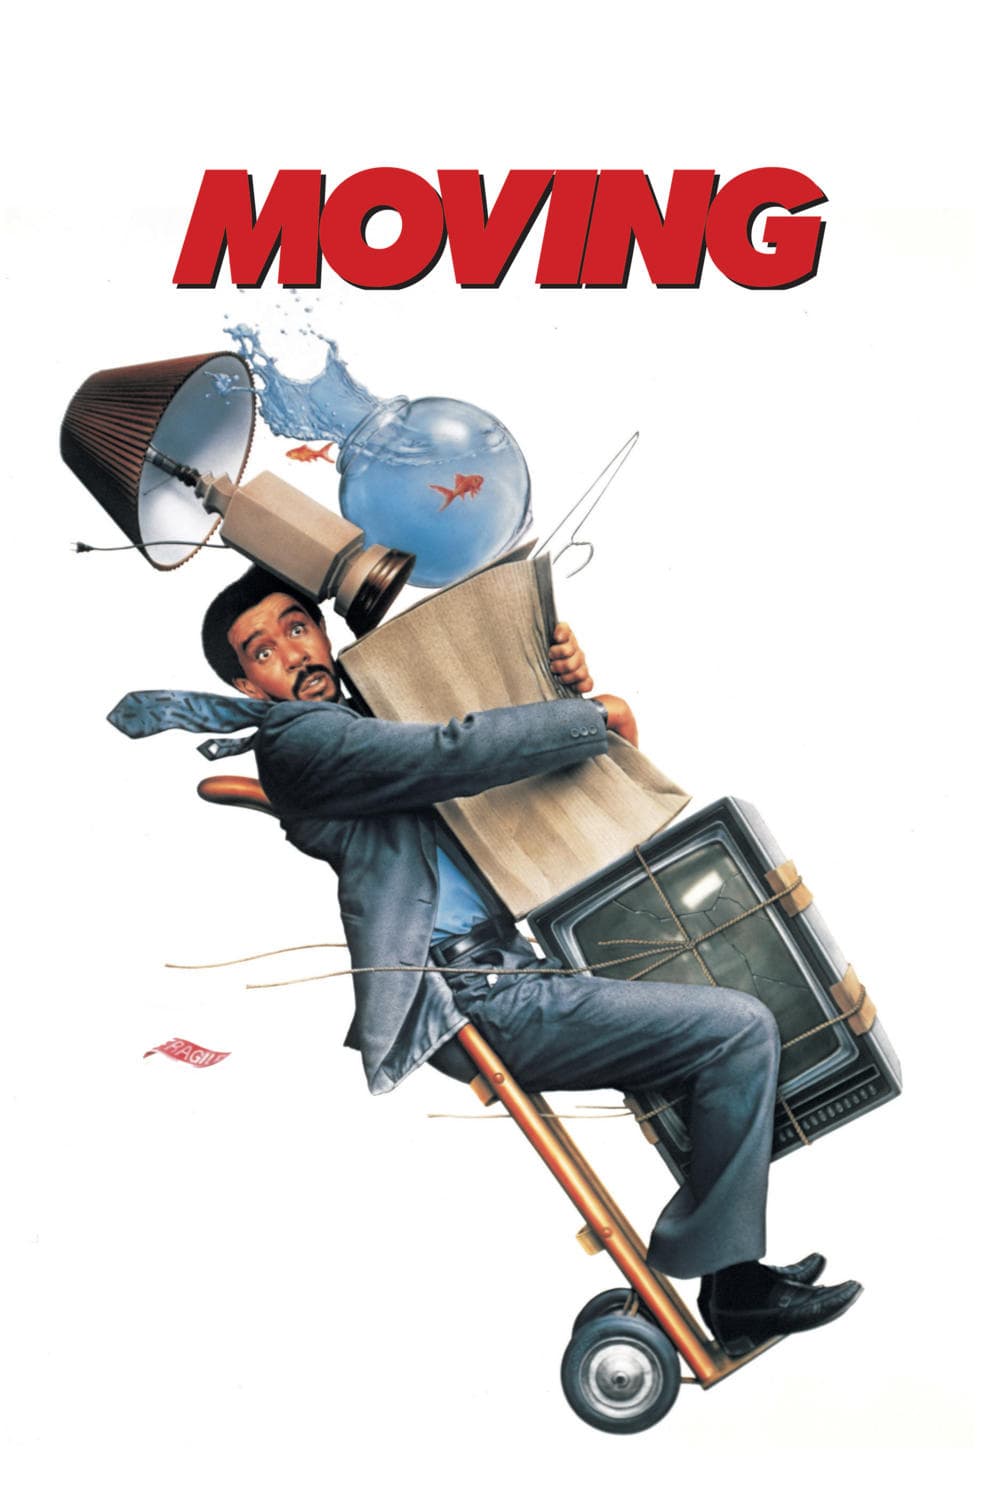 Plakat von "Moving - Rückwärts ins Chaos"